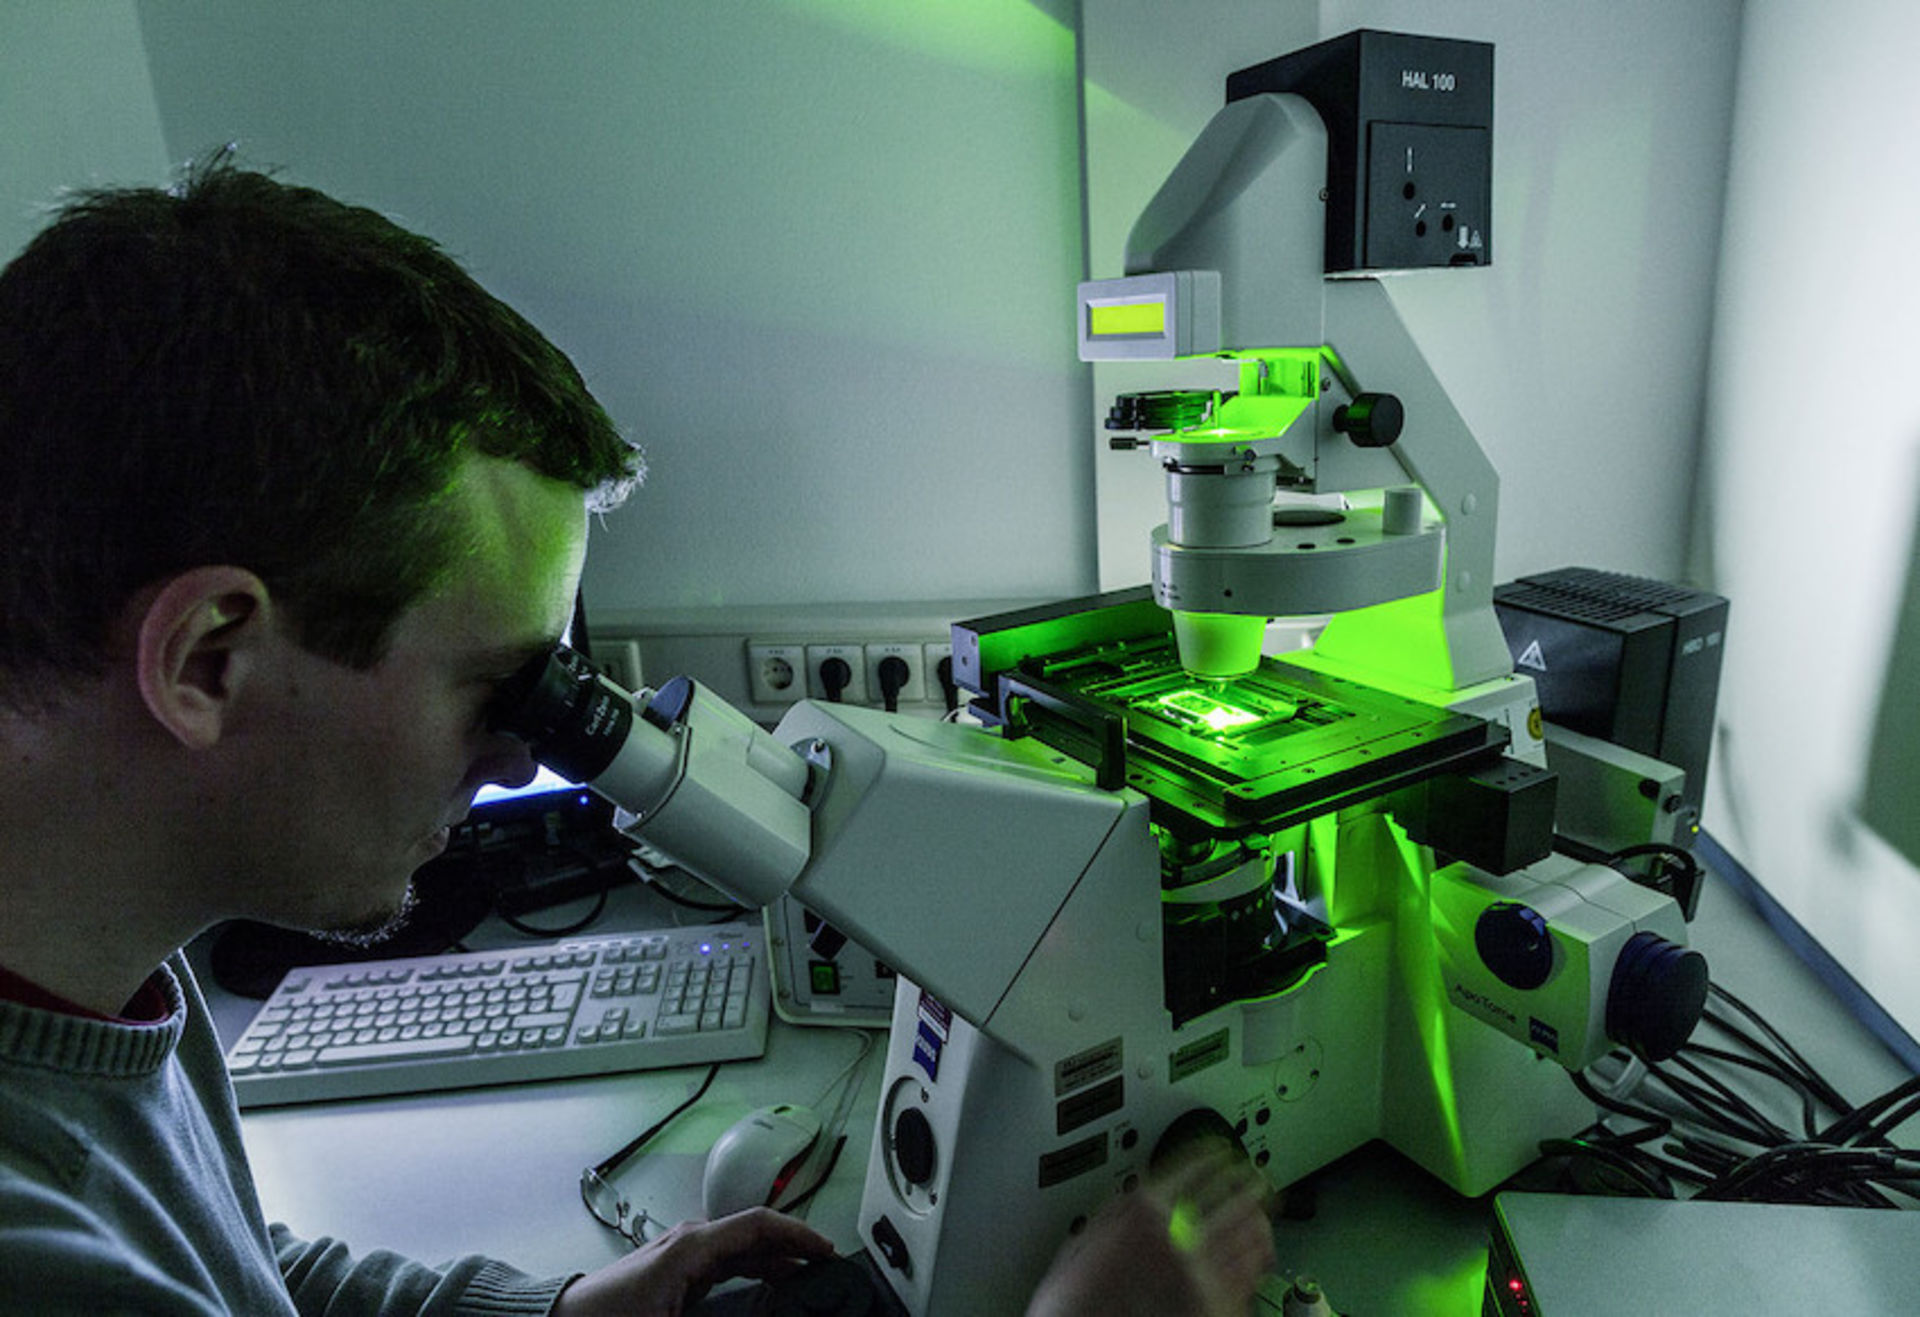 FLI: Fluoroscence Microscopy